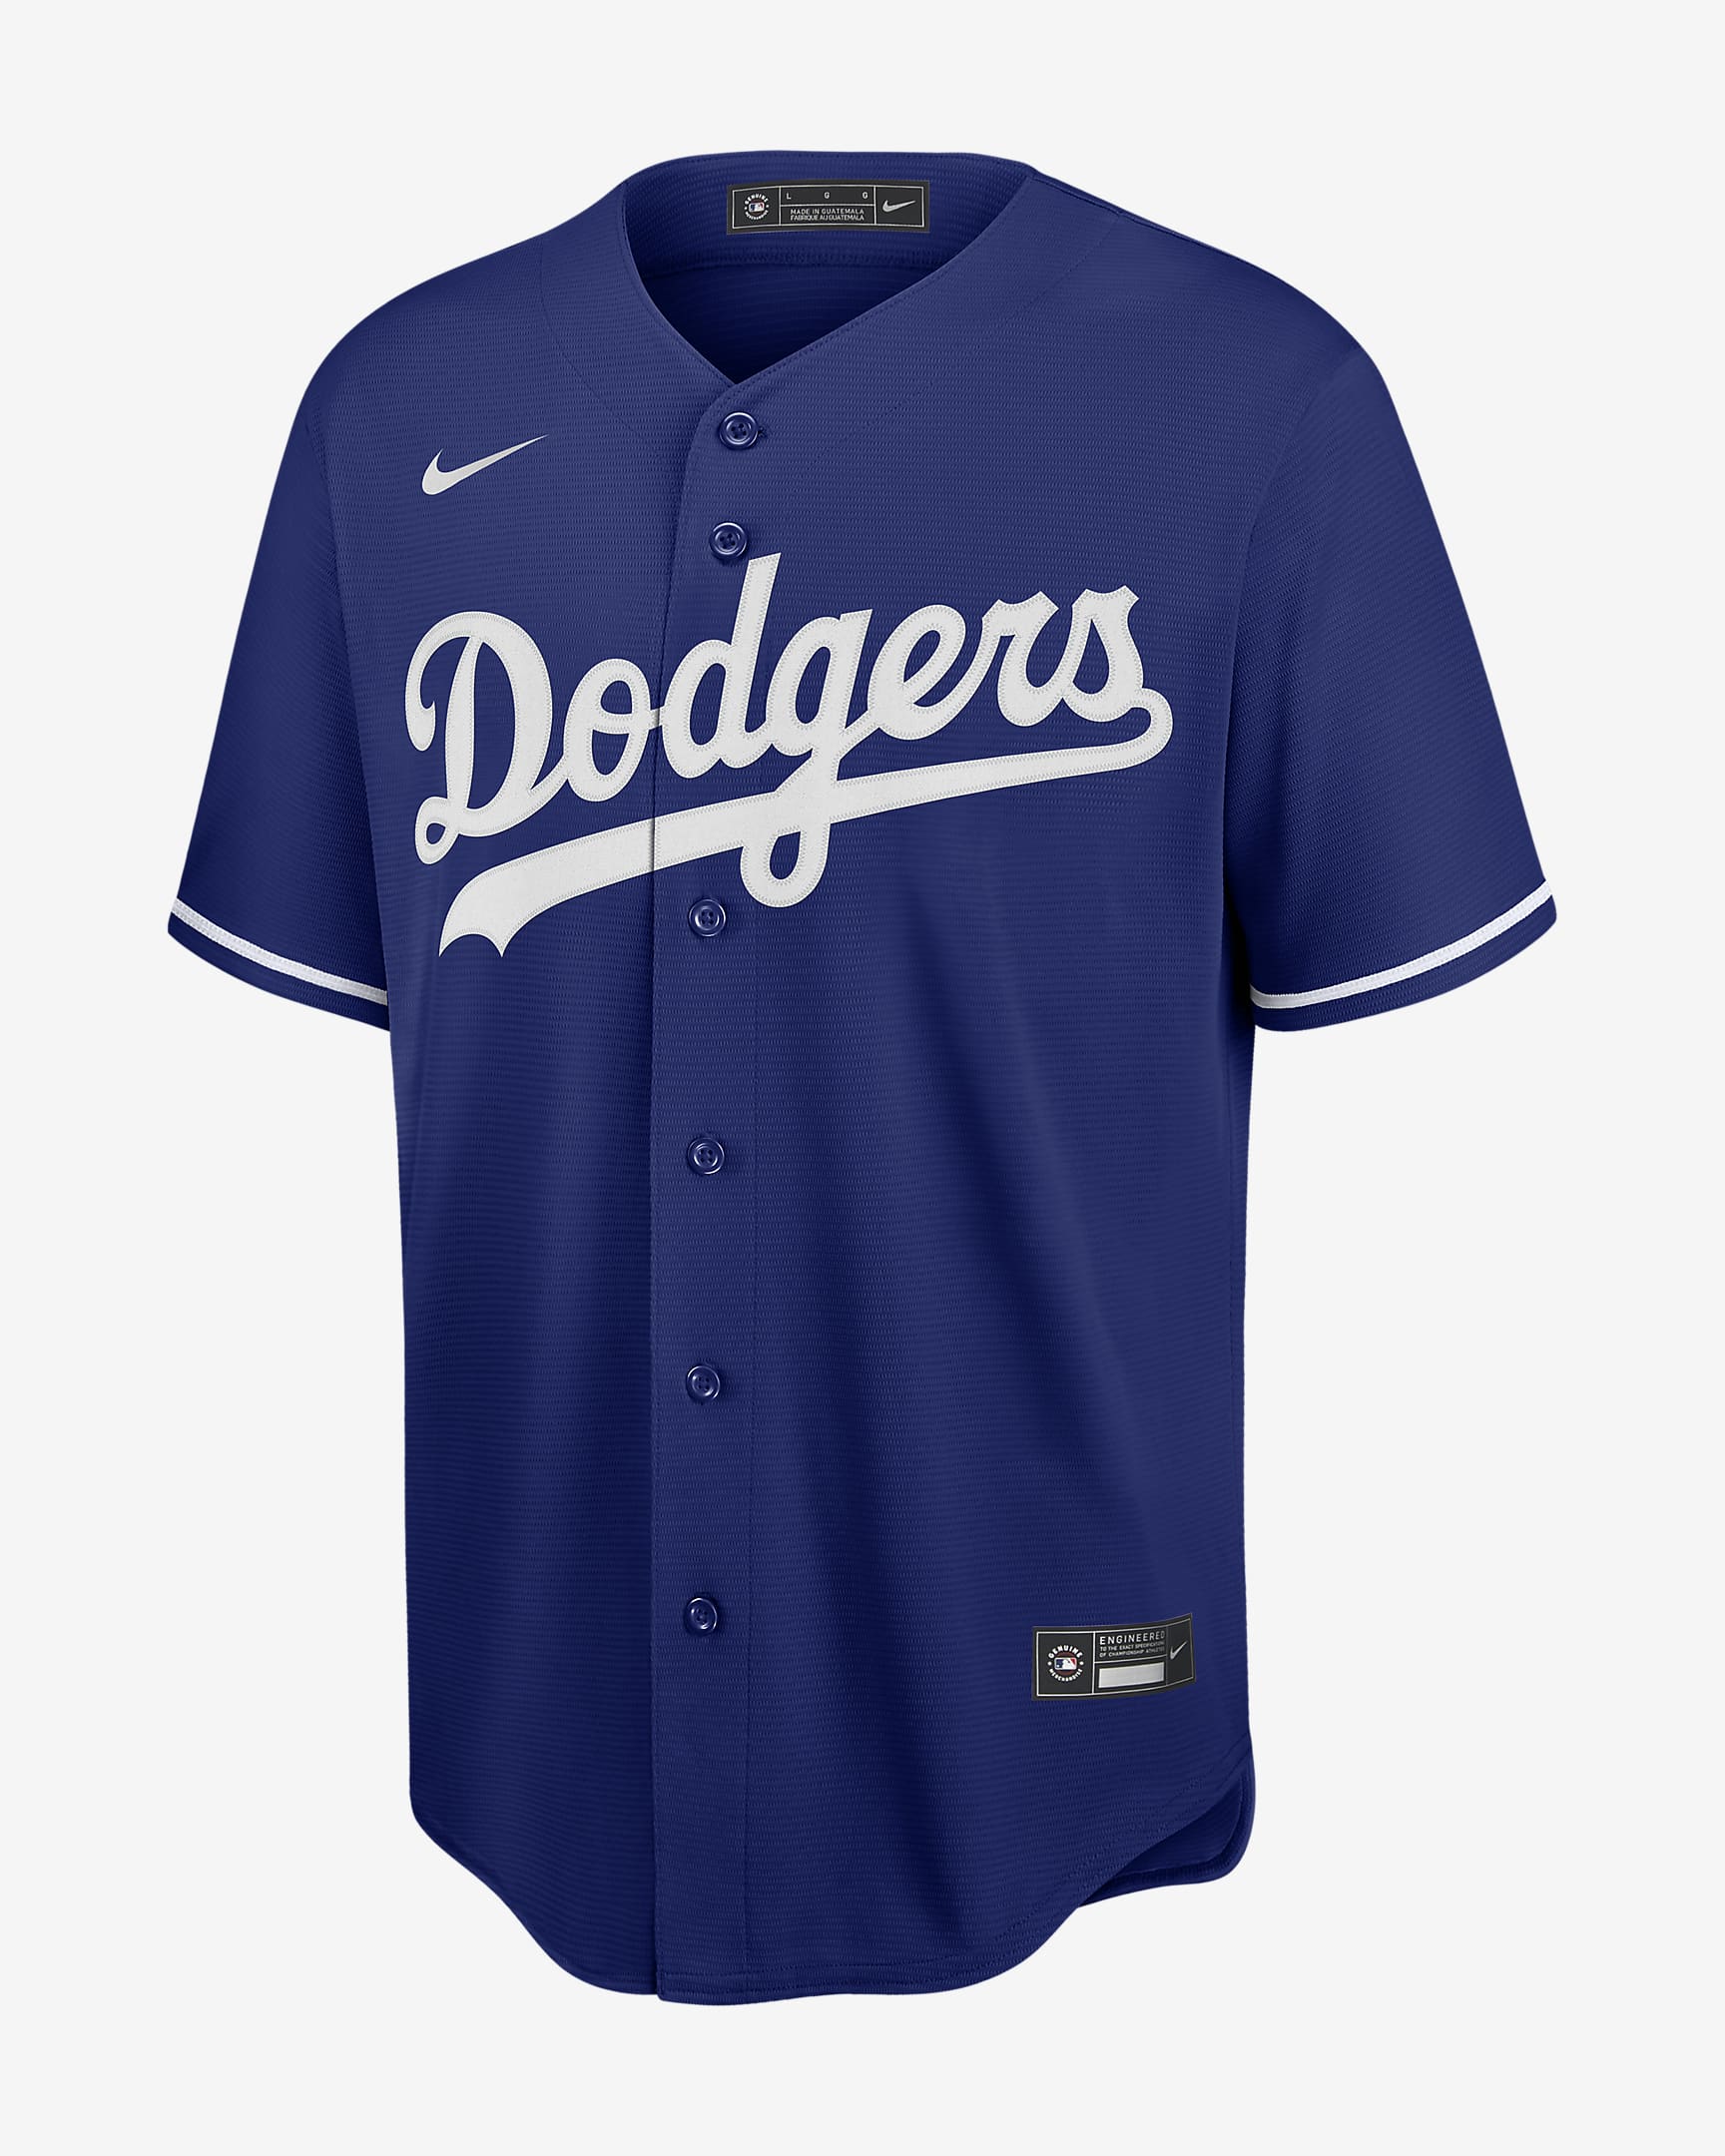 MLB Los Angeles Dodgers (Cody Bellinger) Men's Replica Baseball Jersey ...